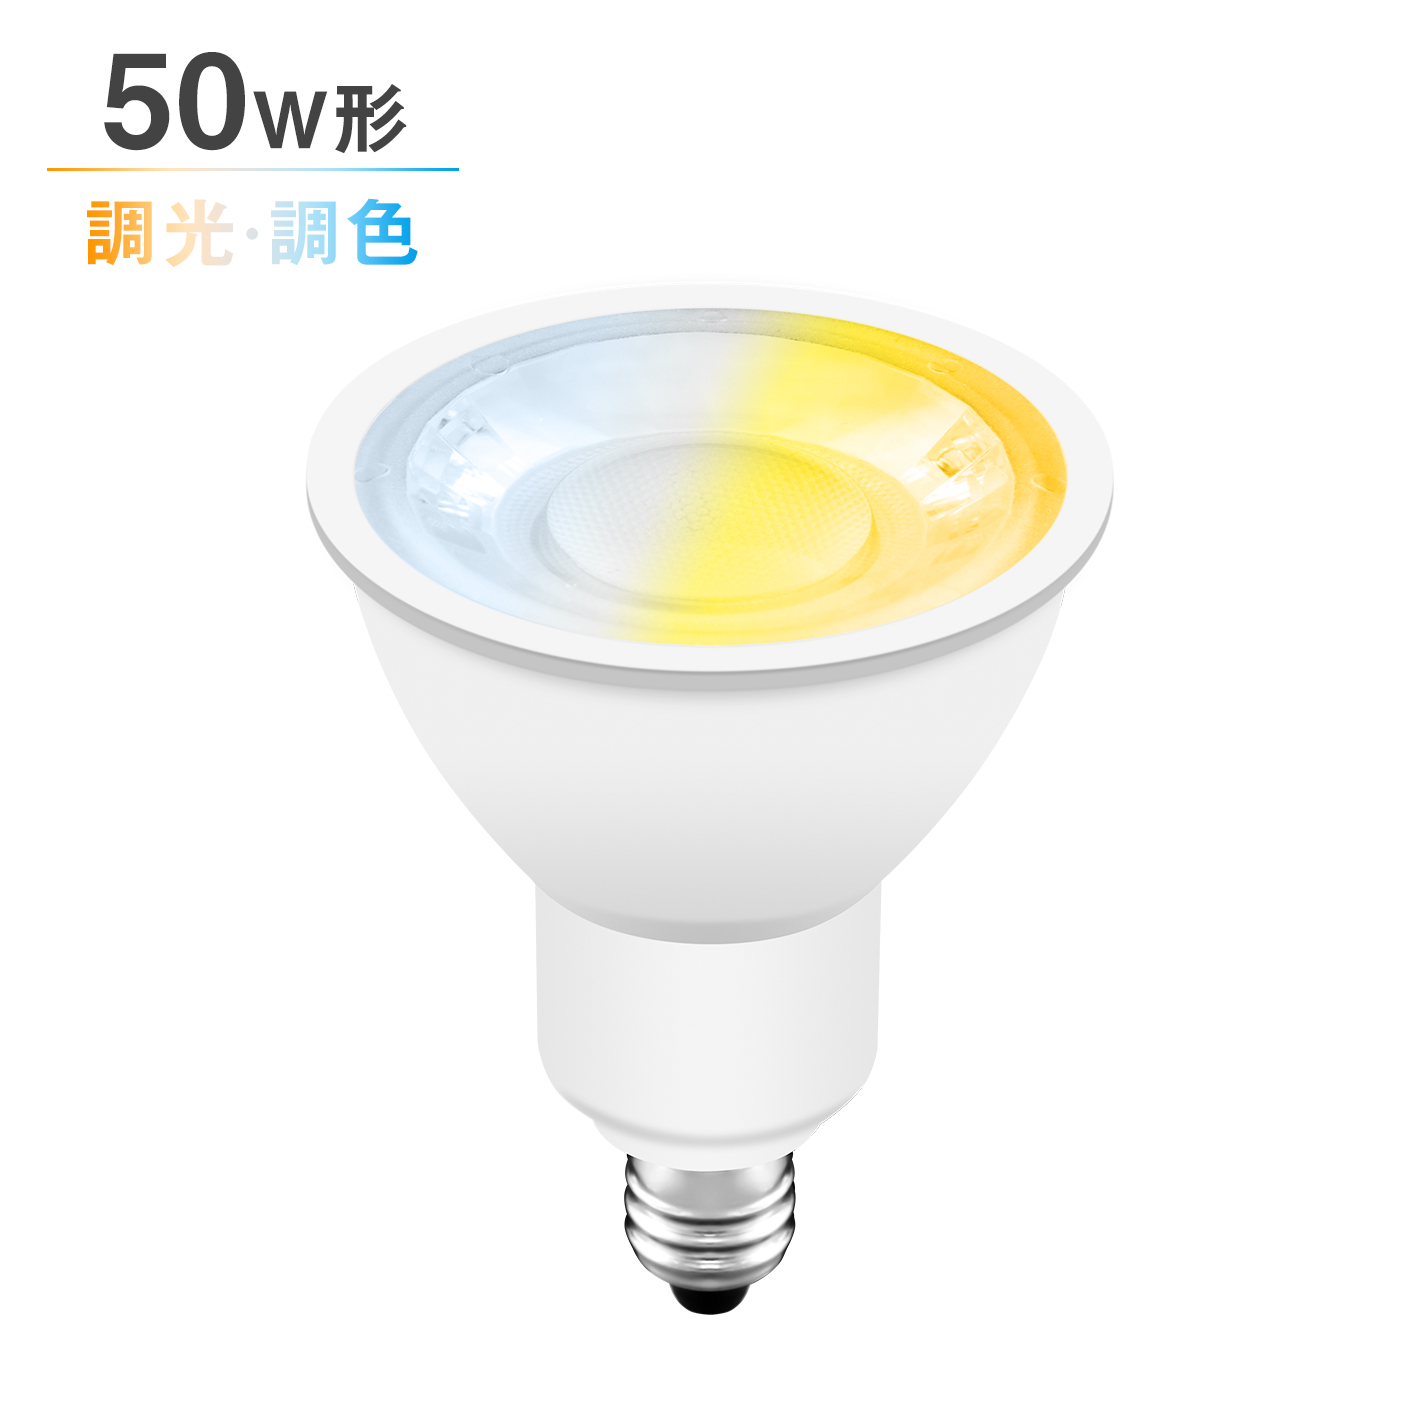 GT-SP-6W-E11CT】LEDスポットライト E11 調光調色 50W形 ハロゲン電球 リモコン対応 電球色 昼白色 昼光色 - 共同照明LED 専門店